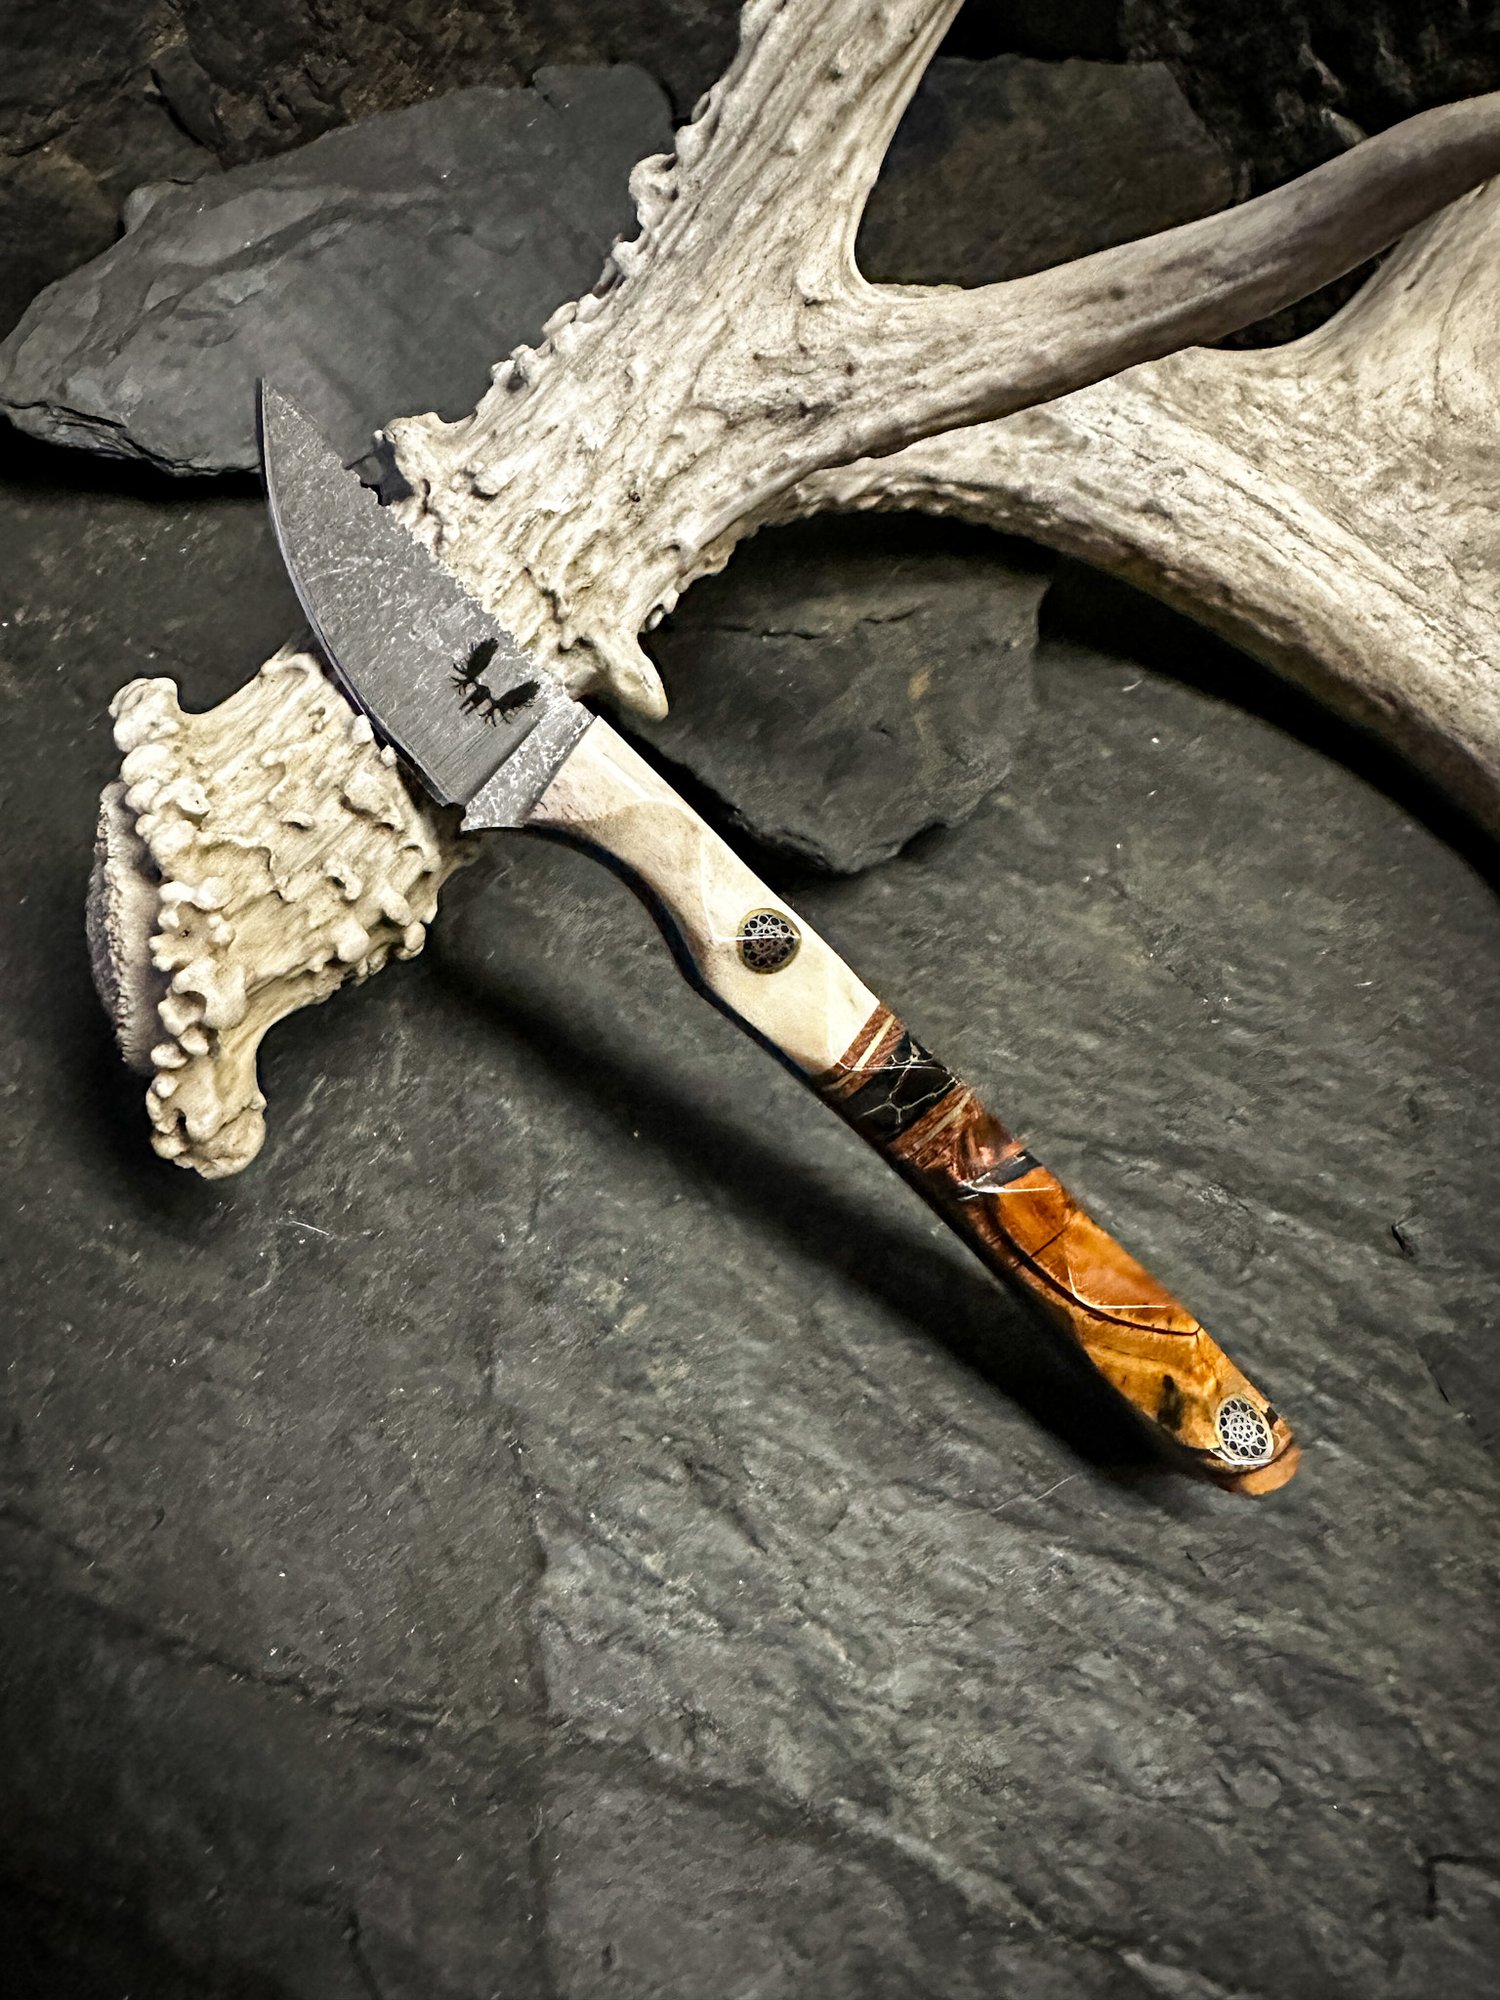 61+ Thousand Craft Knife Royalty-Free Images, Stock Photos